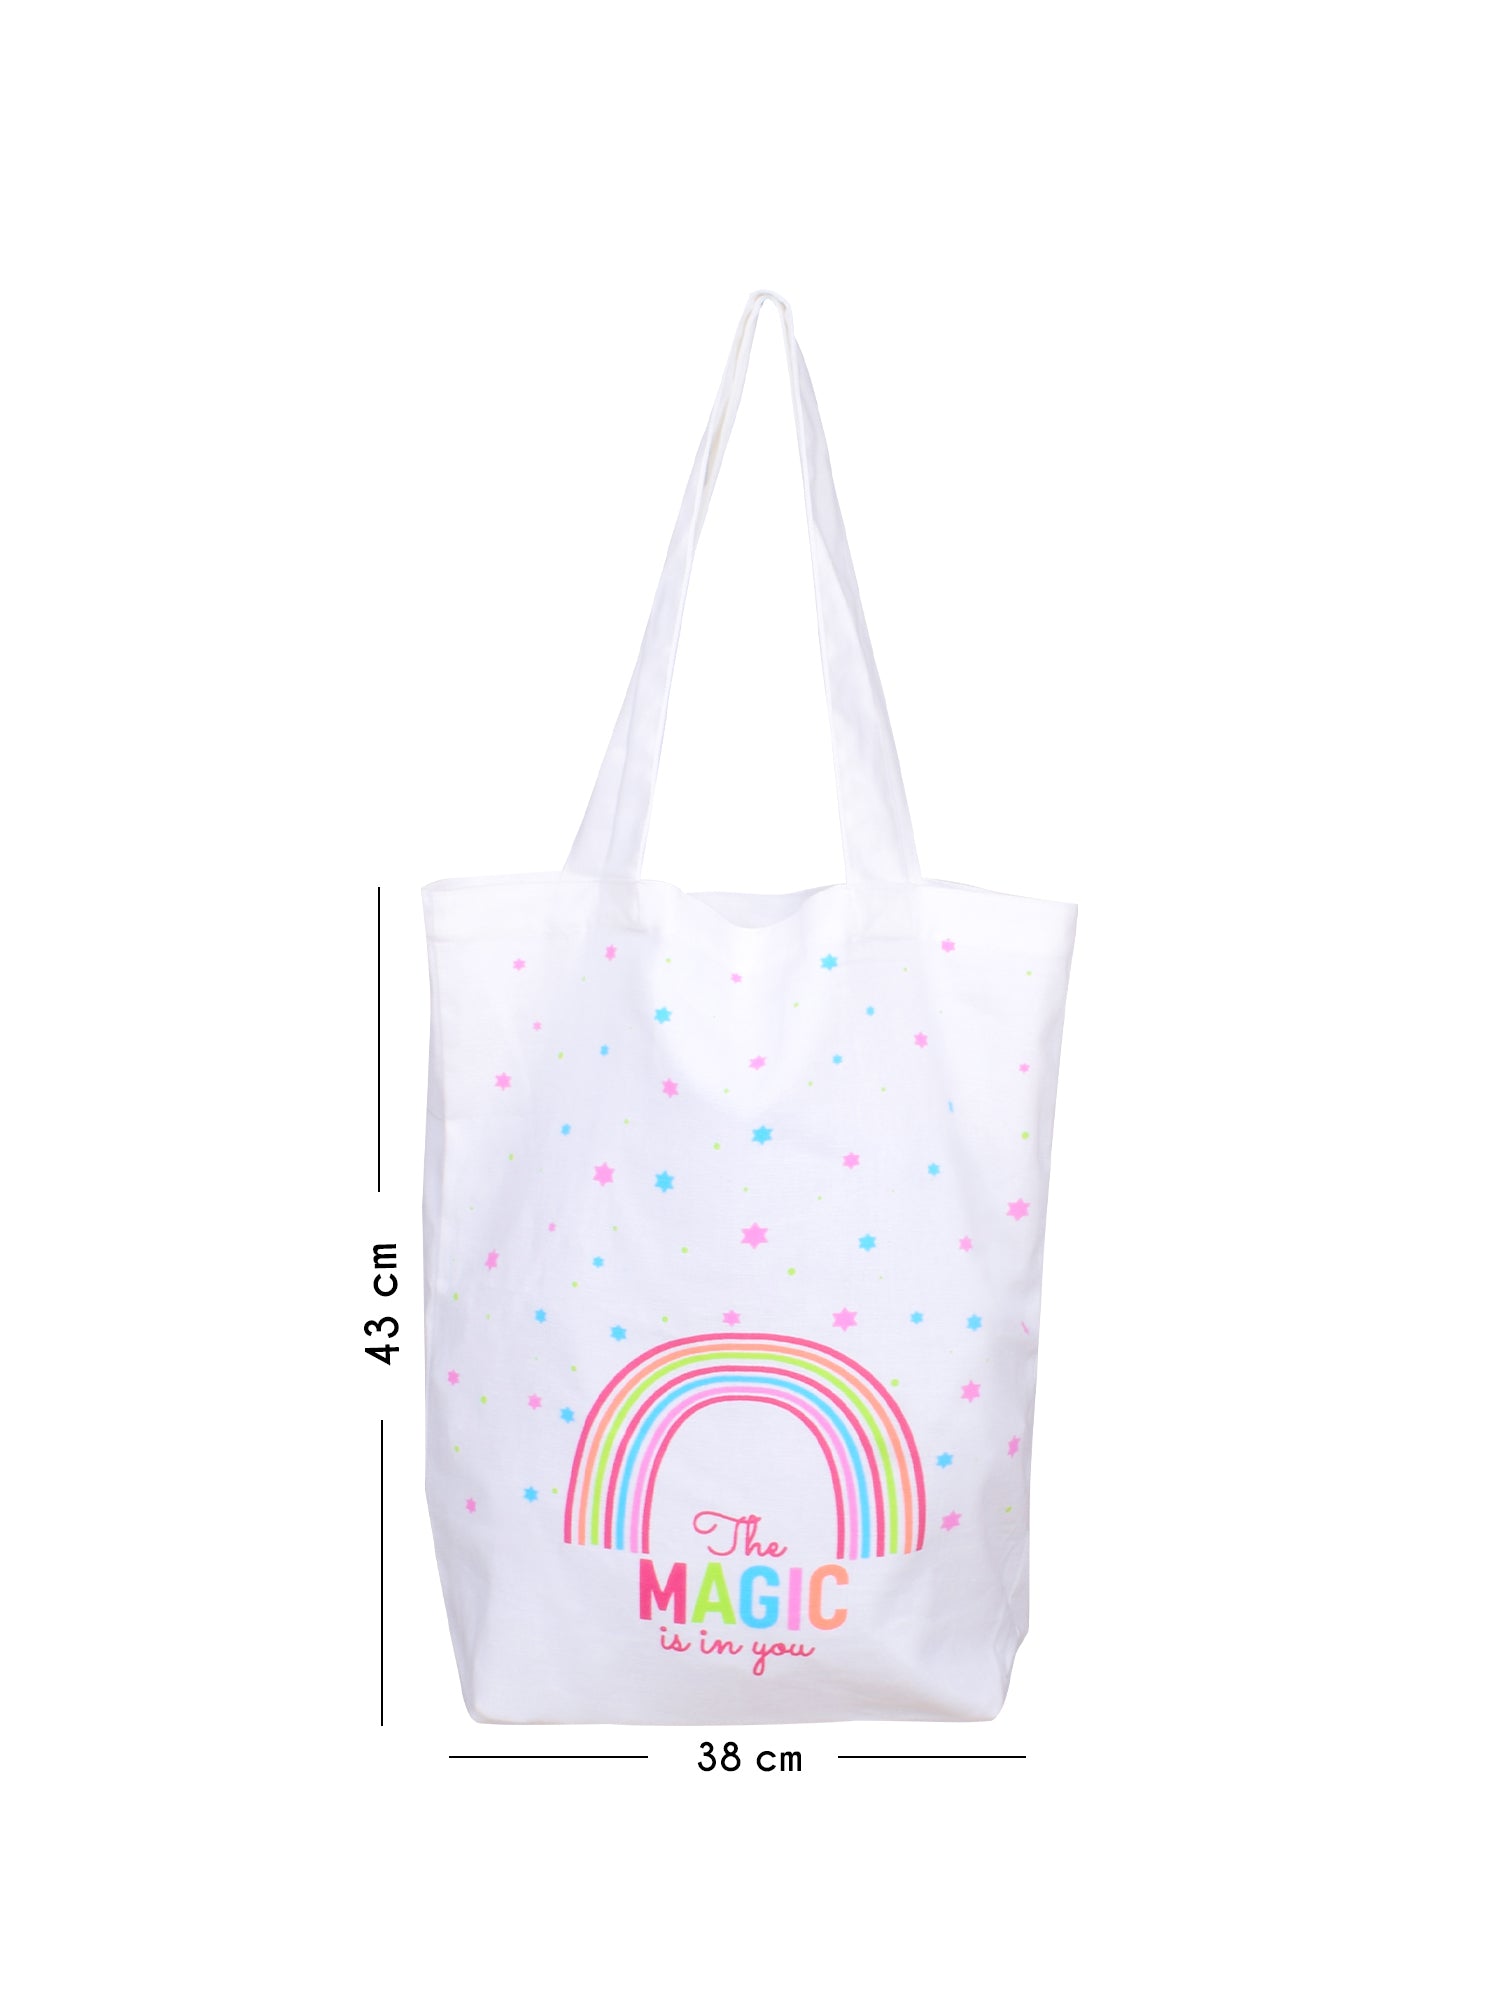 Magical Rainbow Tote Bag